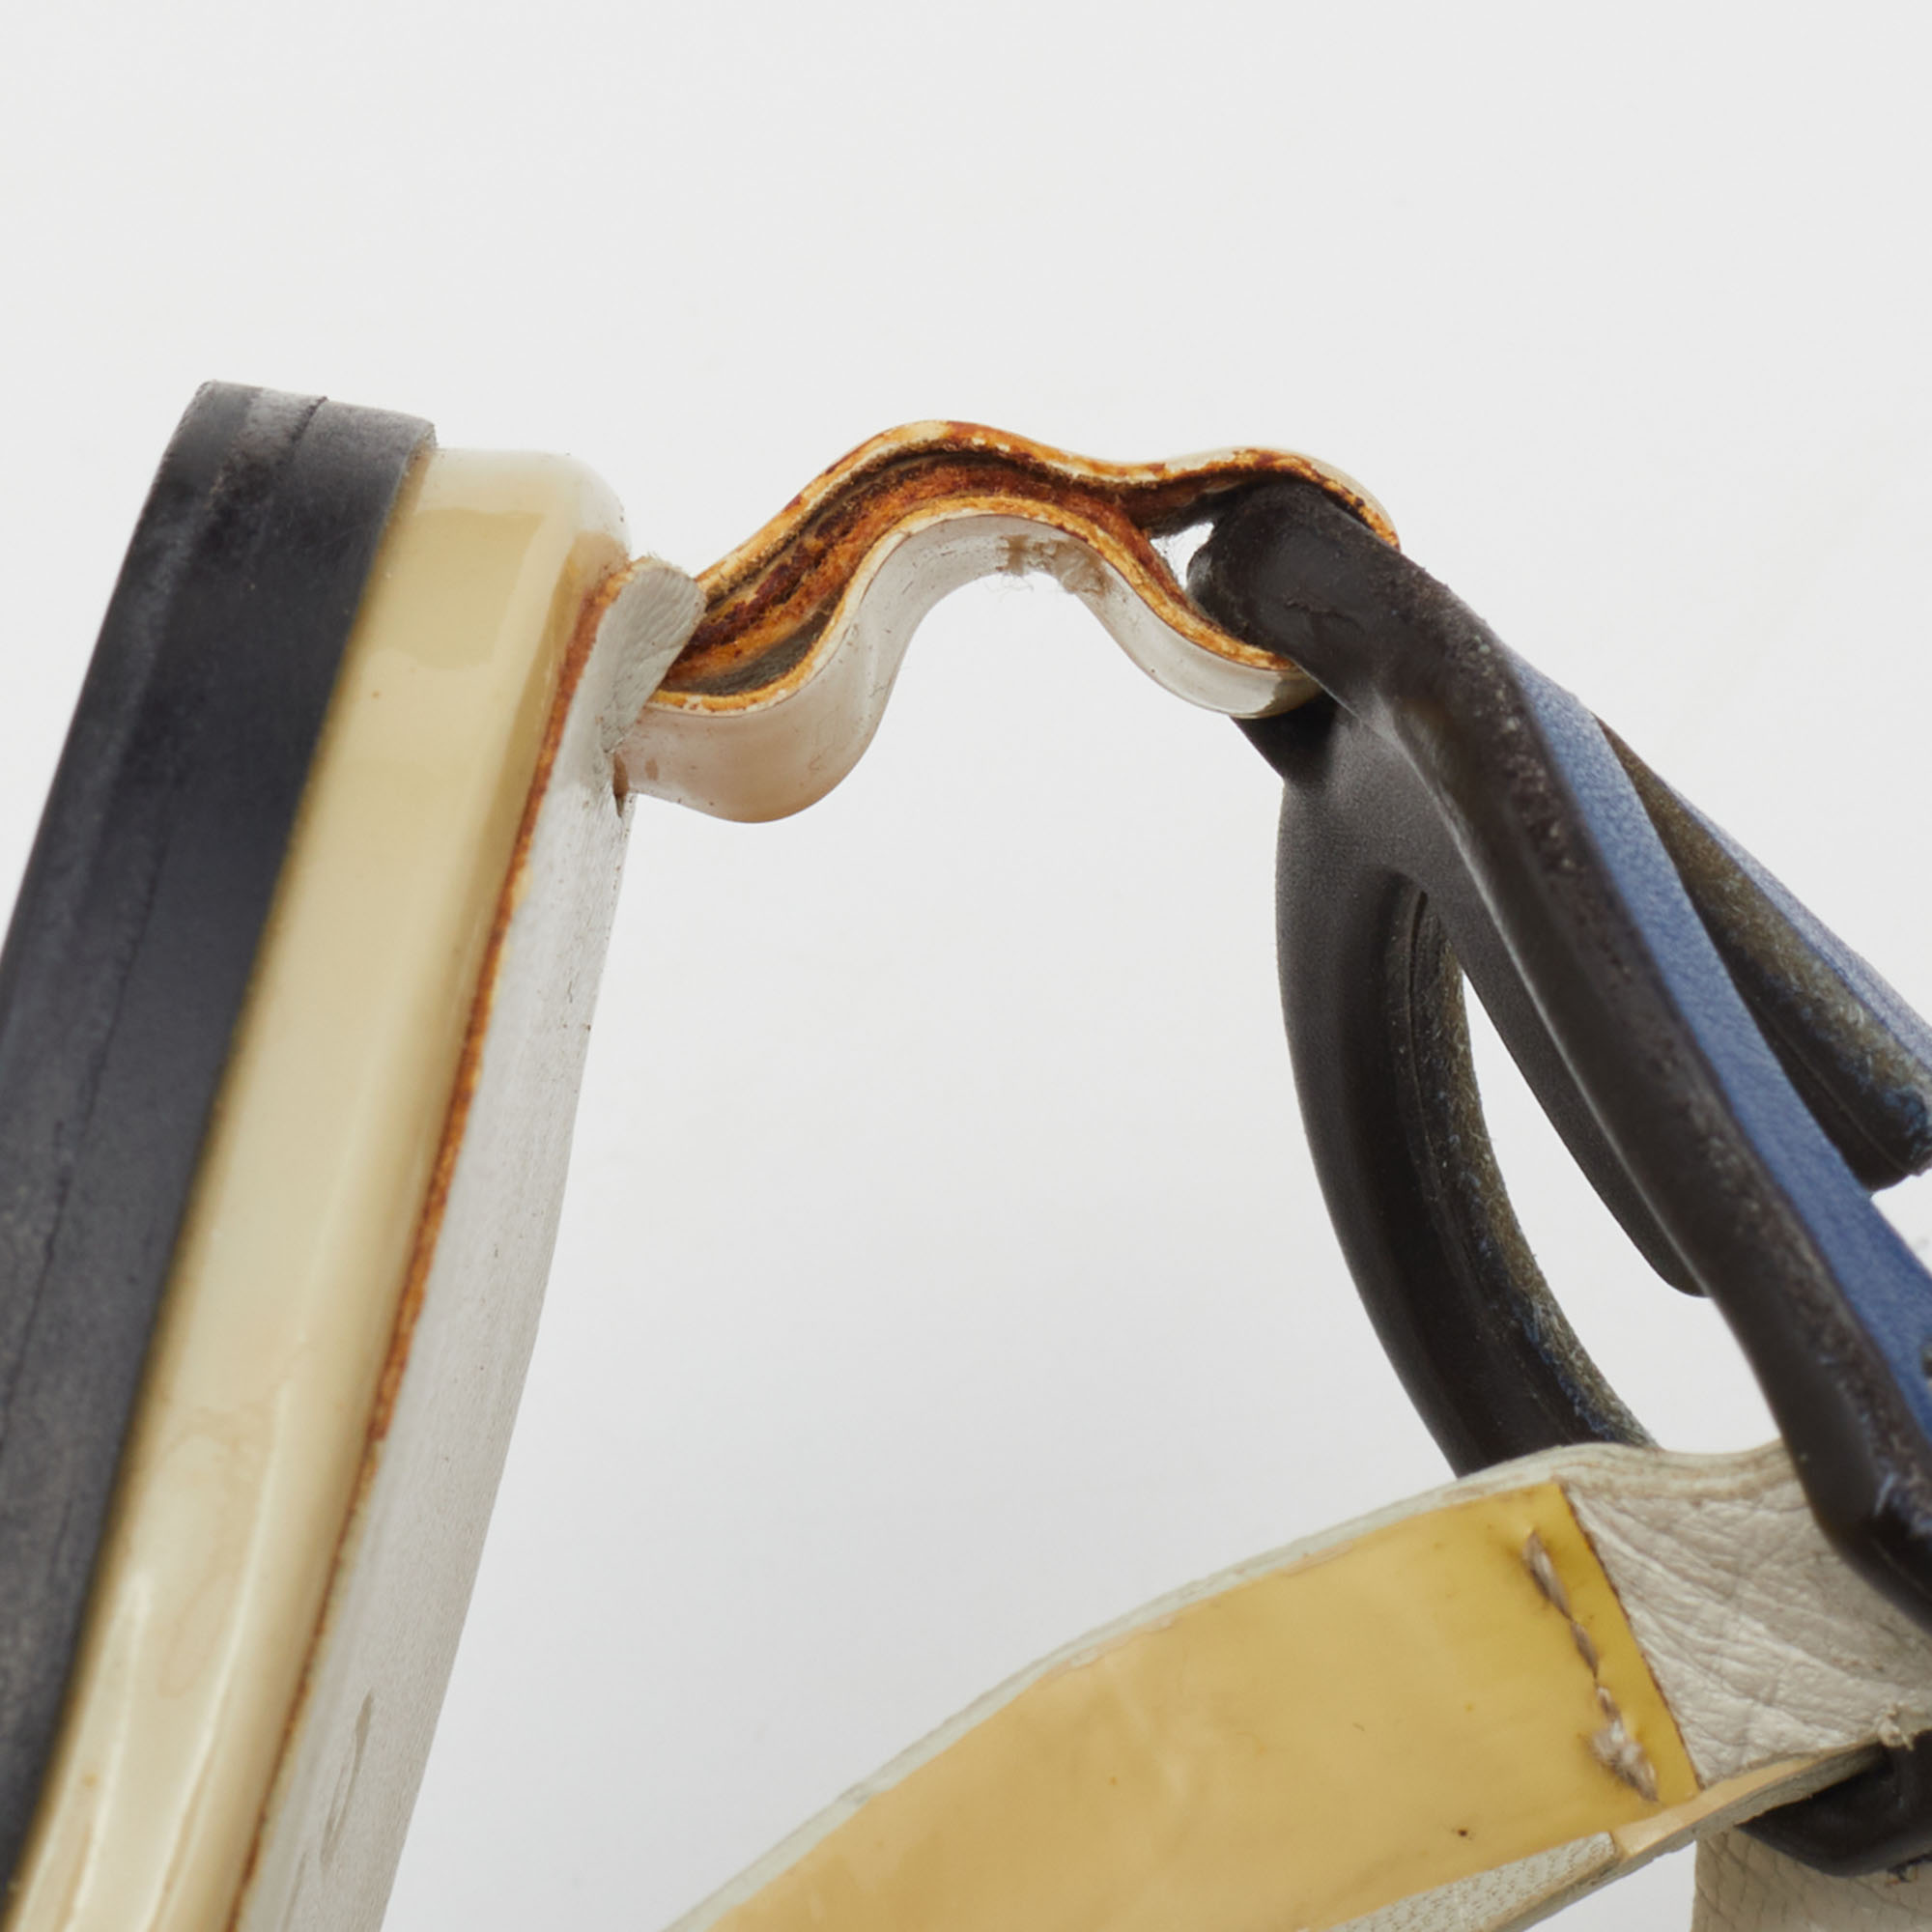 Gucci Beige Patent Leather Interlocking G Thong Flat Sandals Size 35